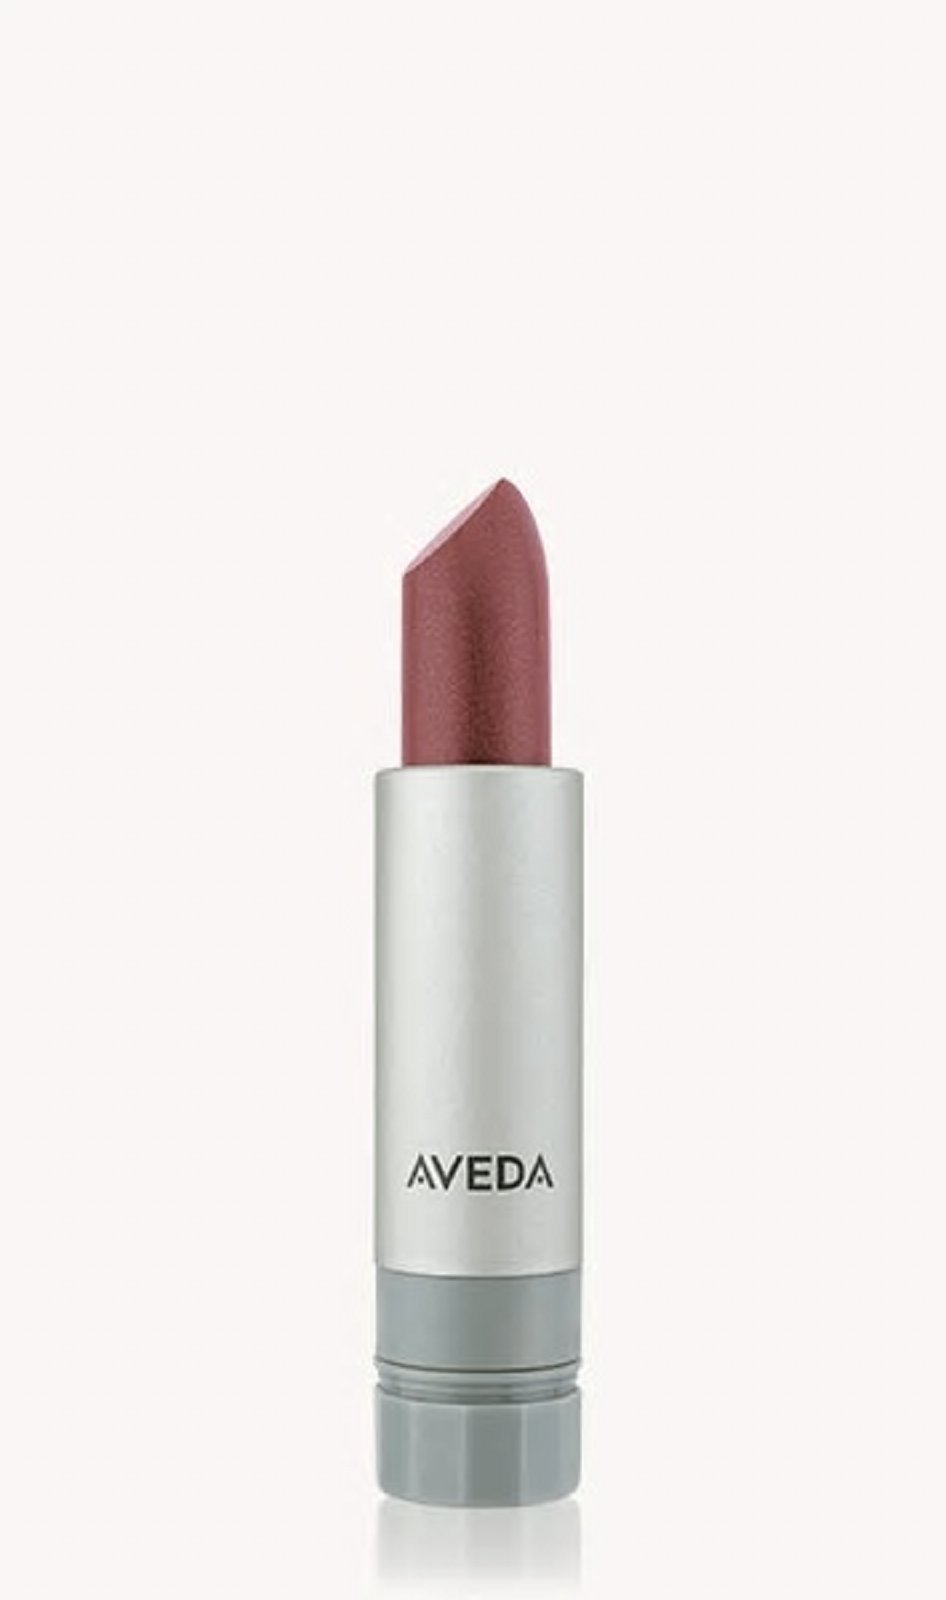 AVEDA new lipstick lip color Blushed Honey 531 Nourish-Mint discontinued